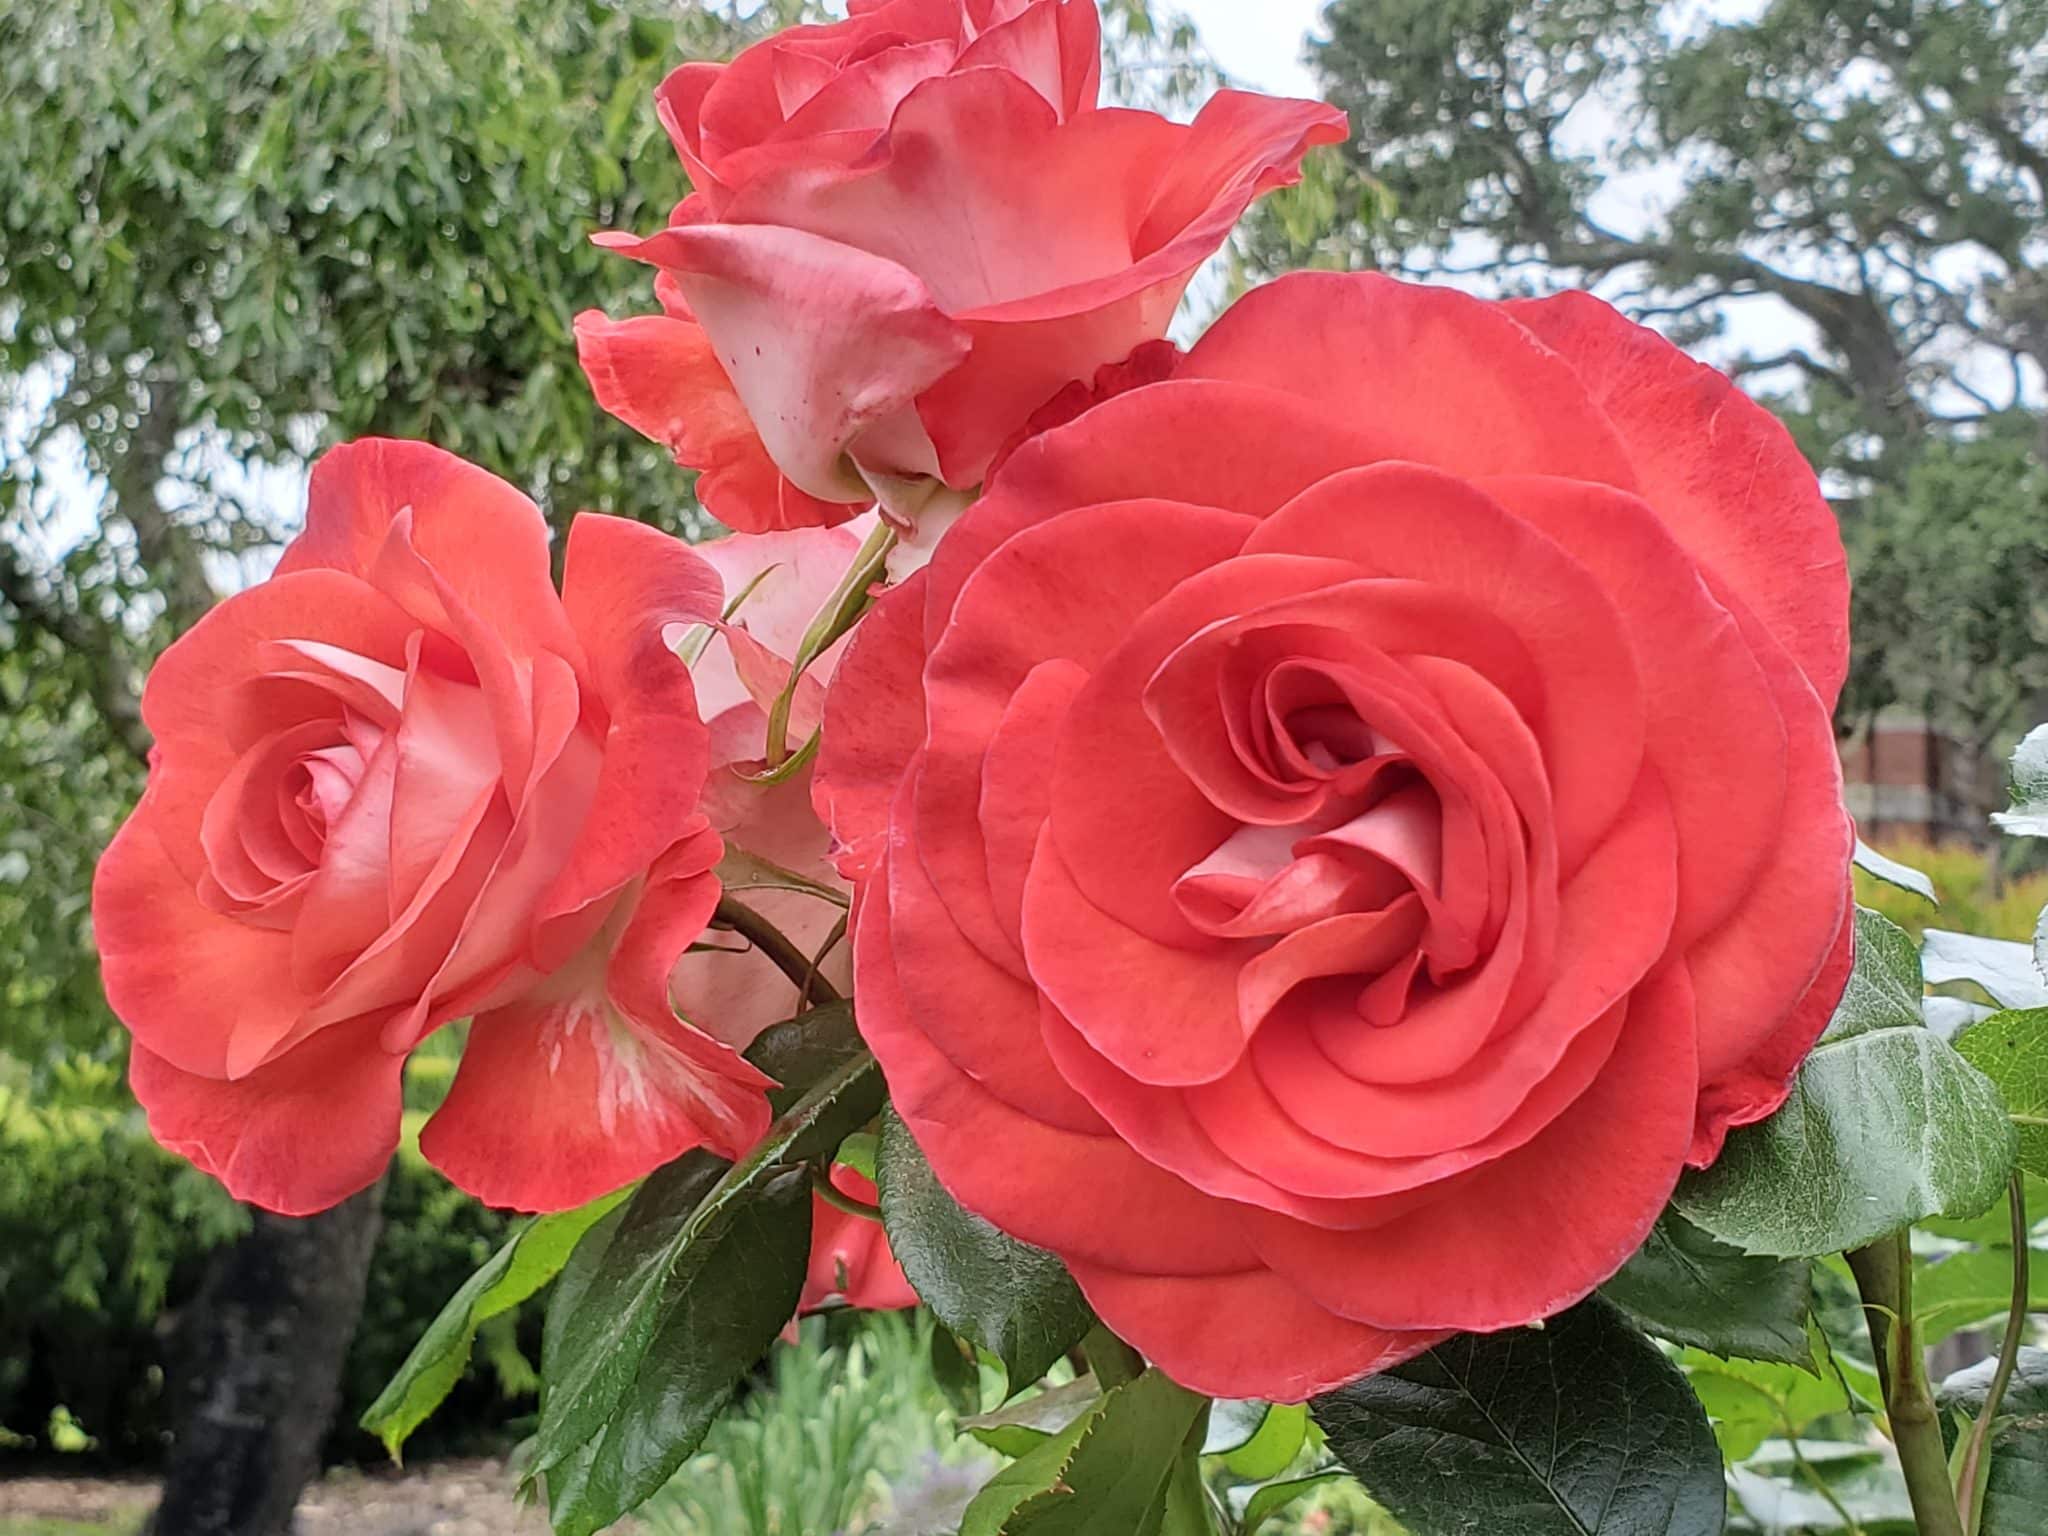 Rose with reddish-pink furls